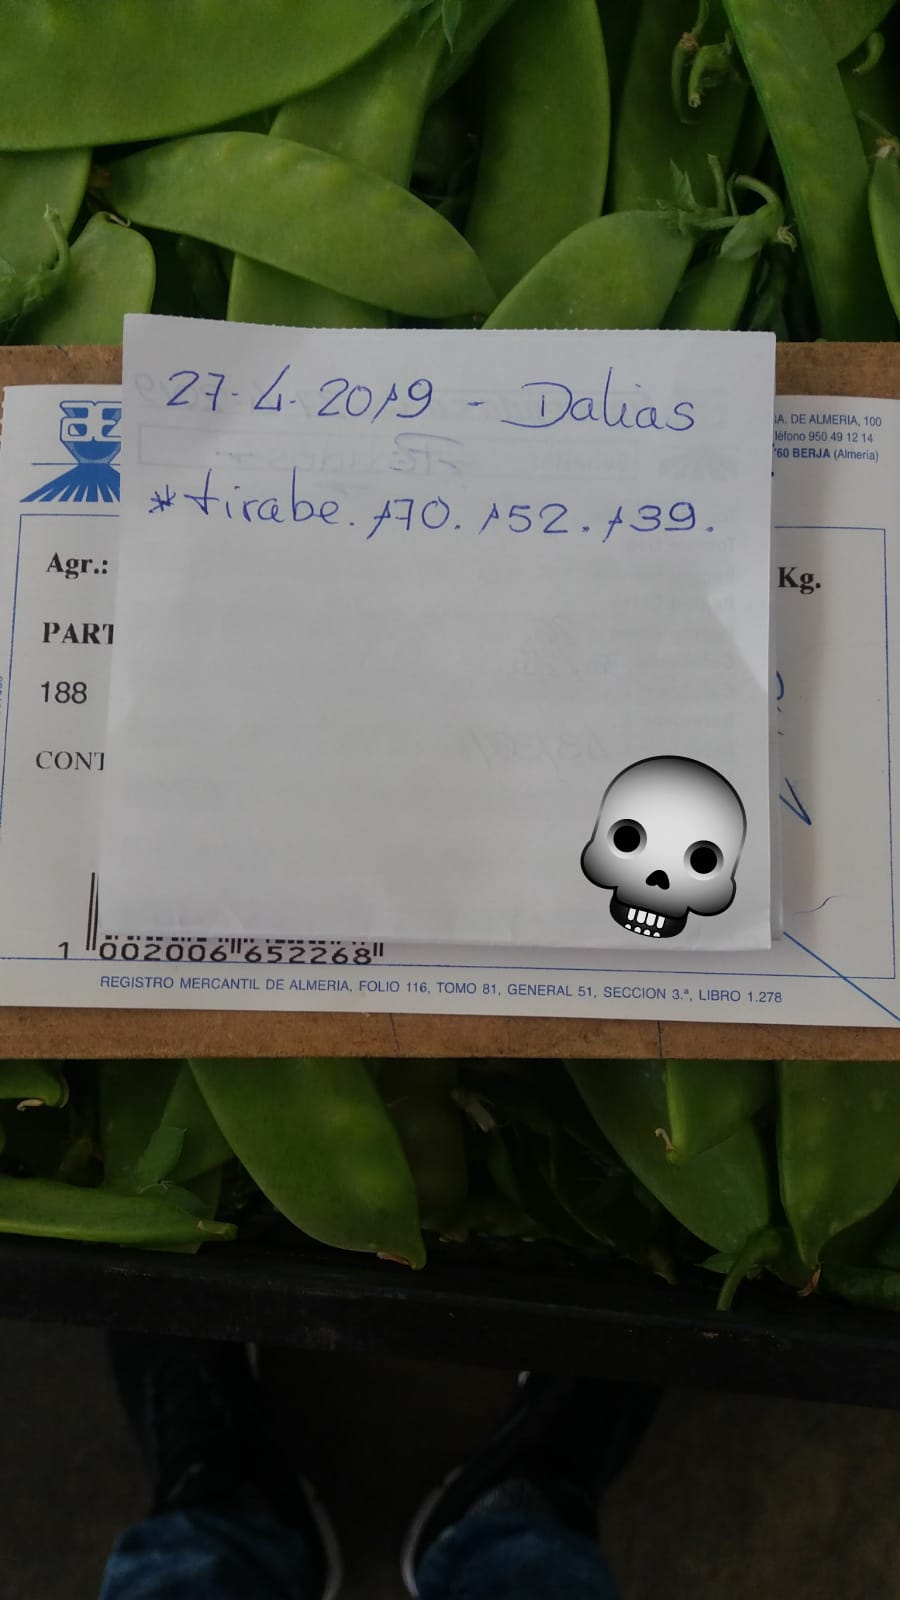 Subasta hortofrutícola AgroEjido Dalias 27 de Abril 2019